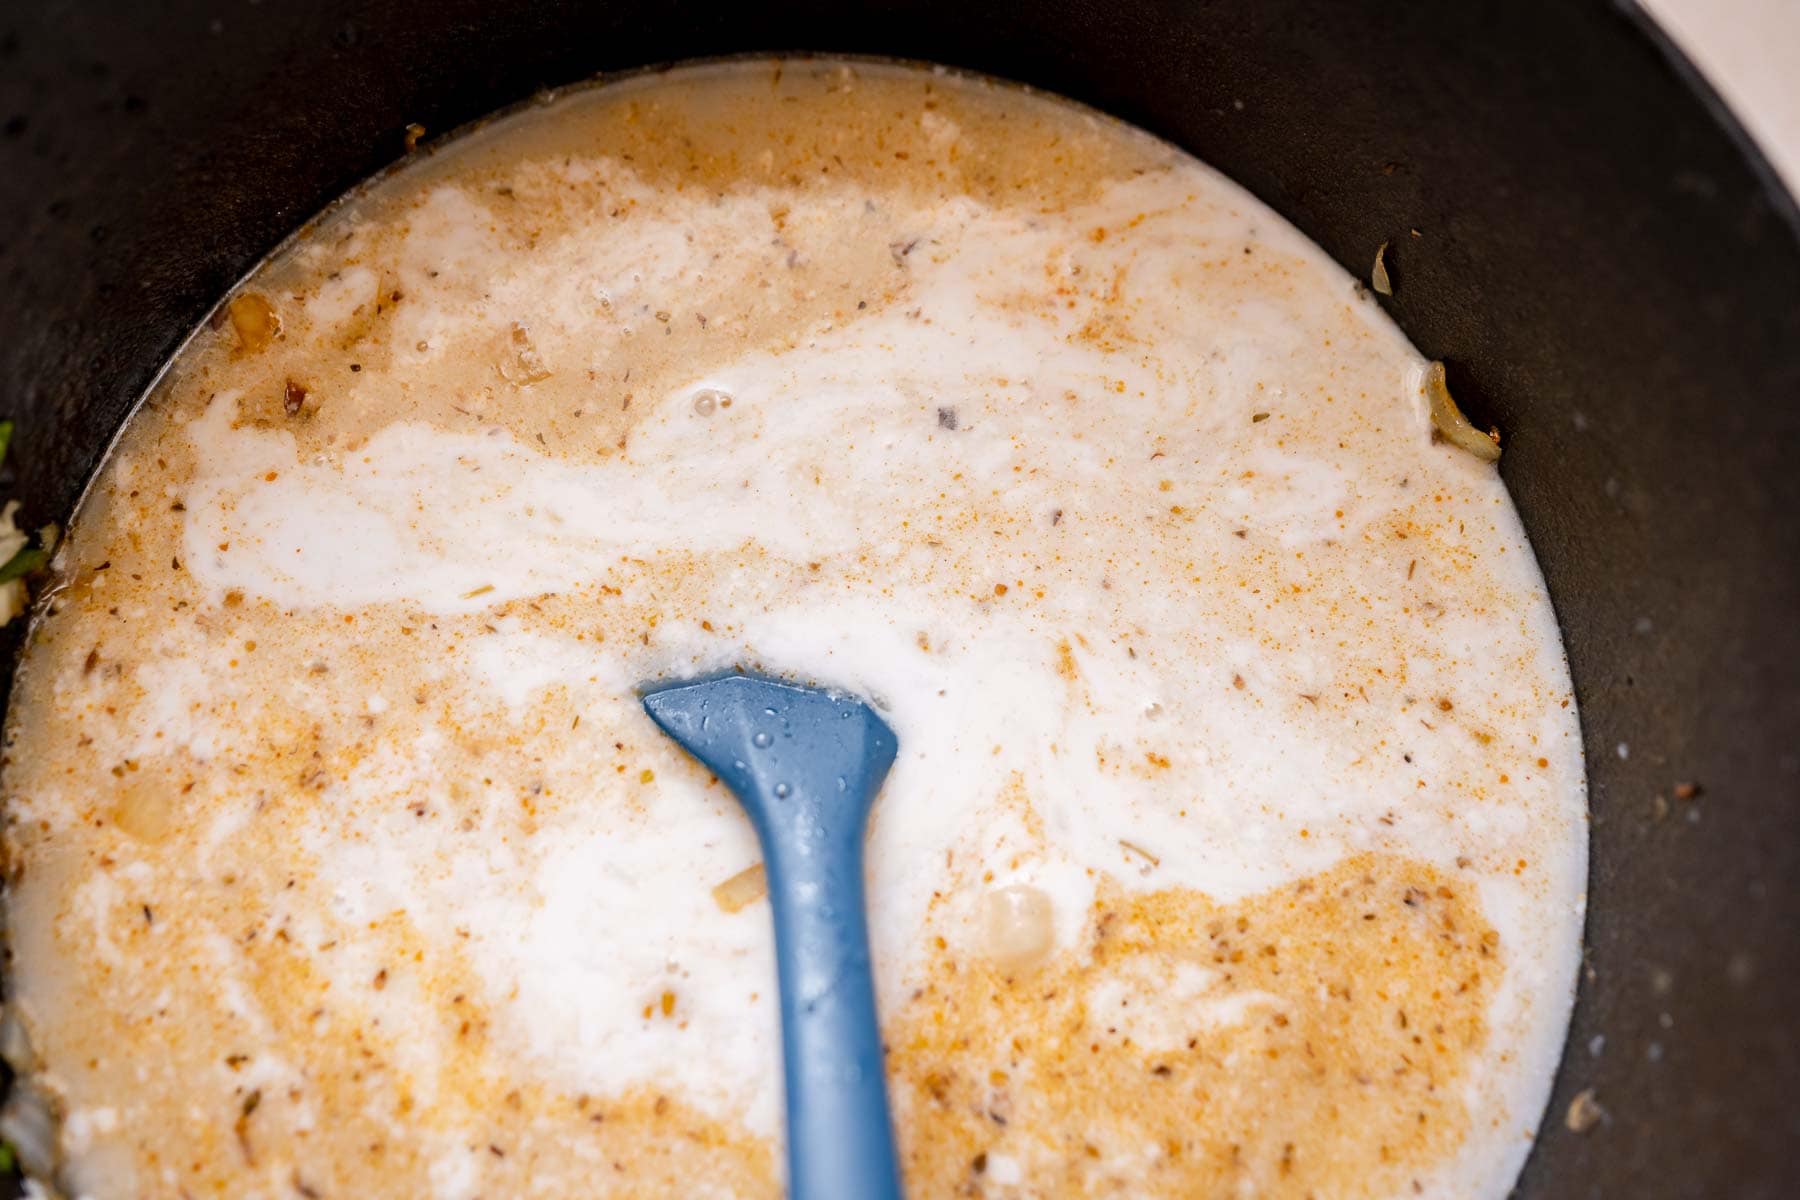 A blue spatula mixes liquid ingredients in a large pot.